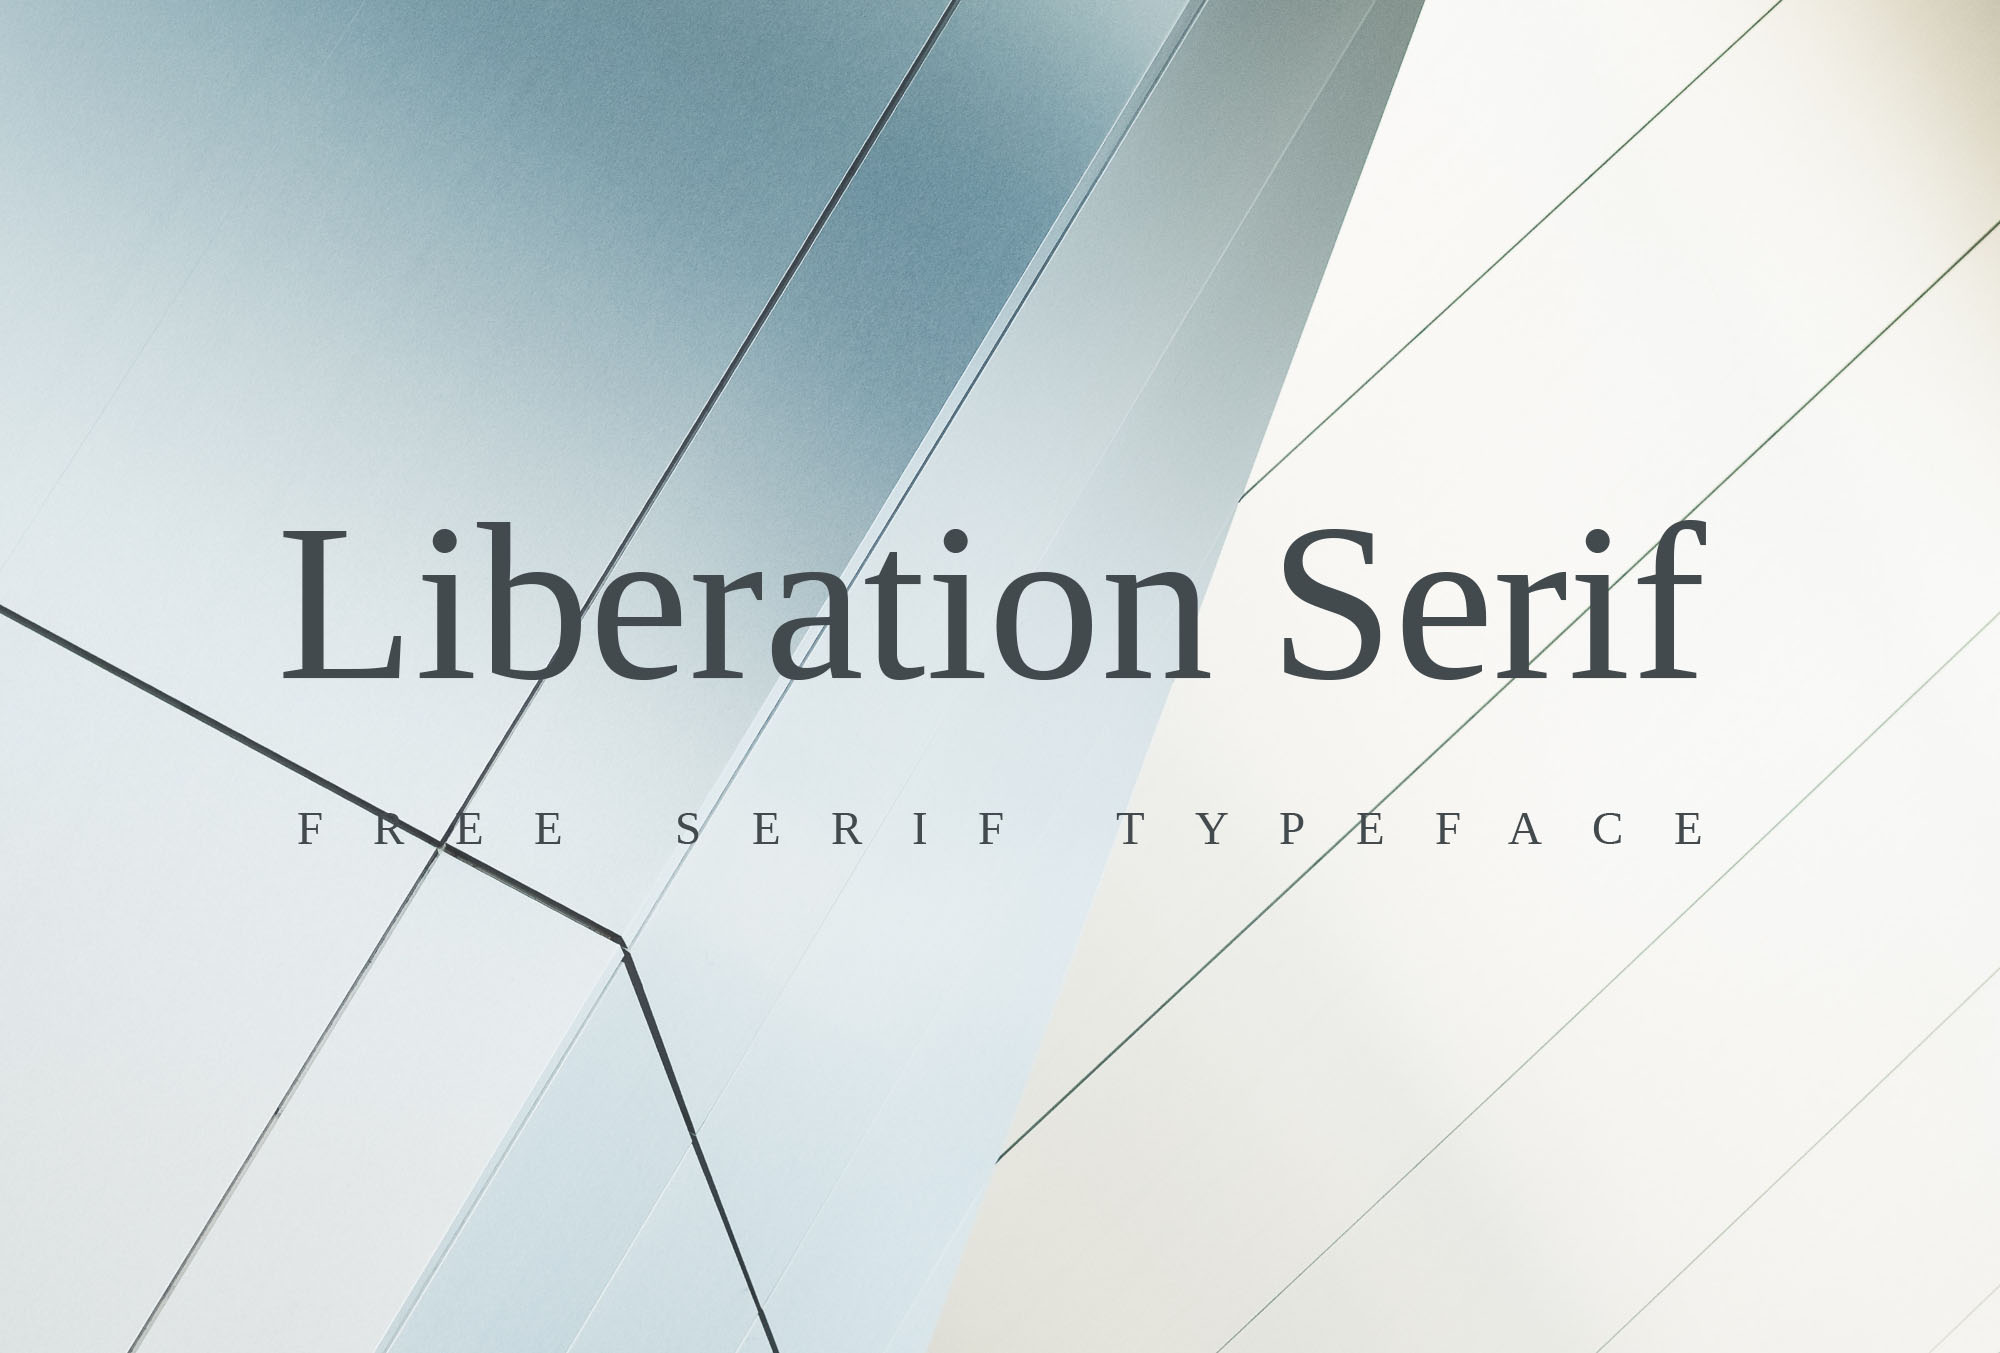 Liberation Serif Font